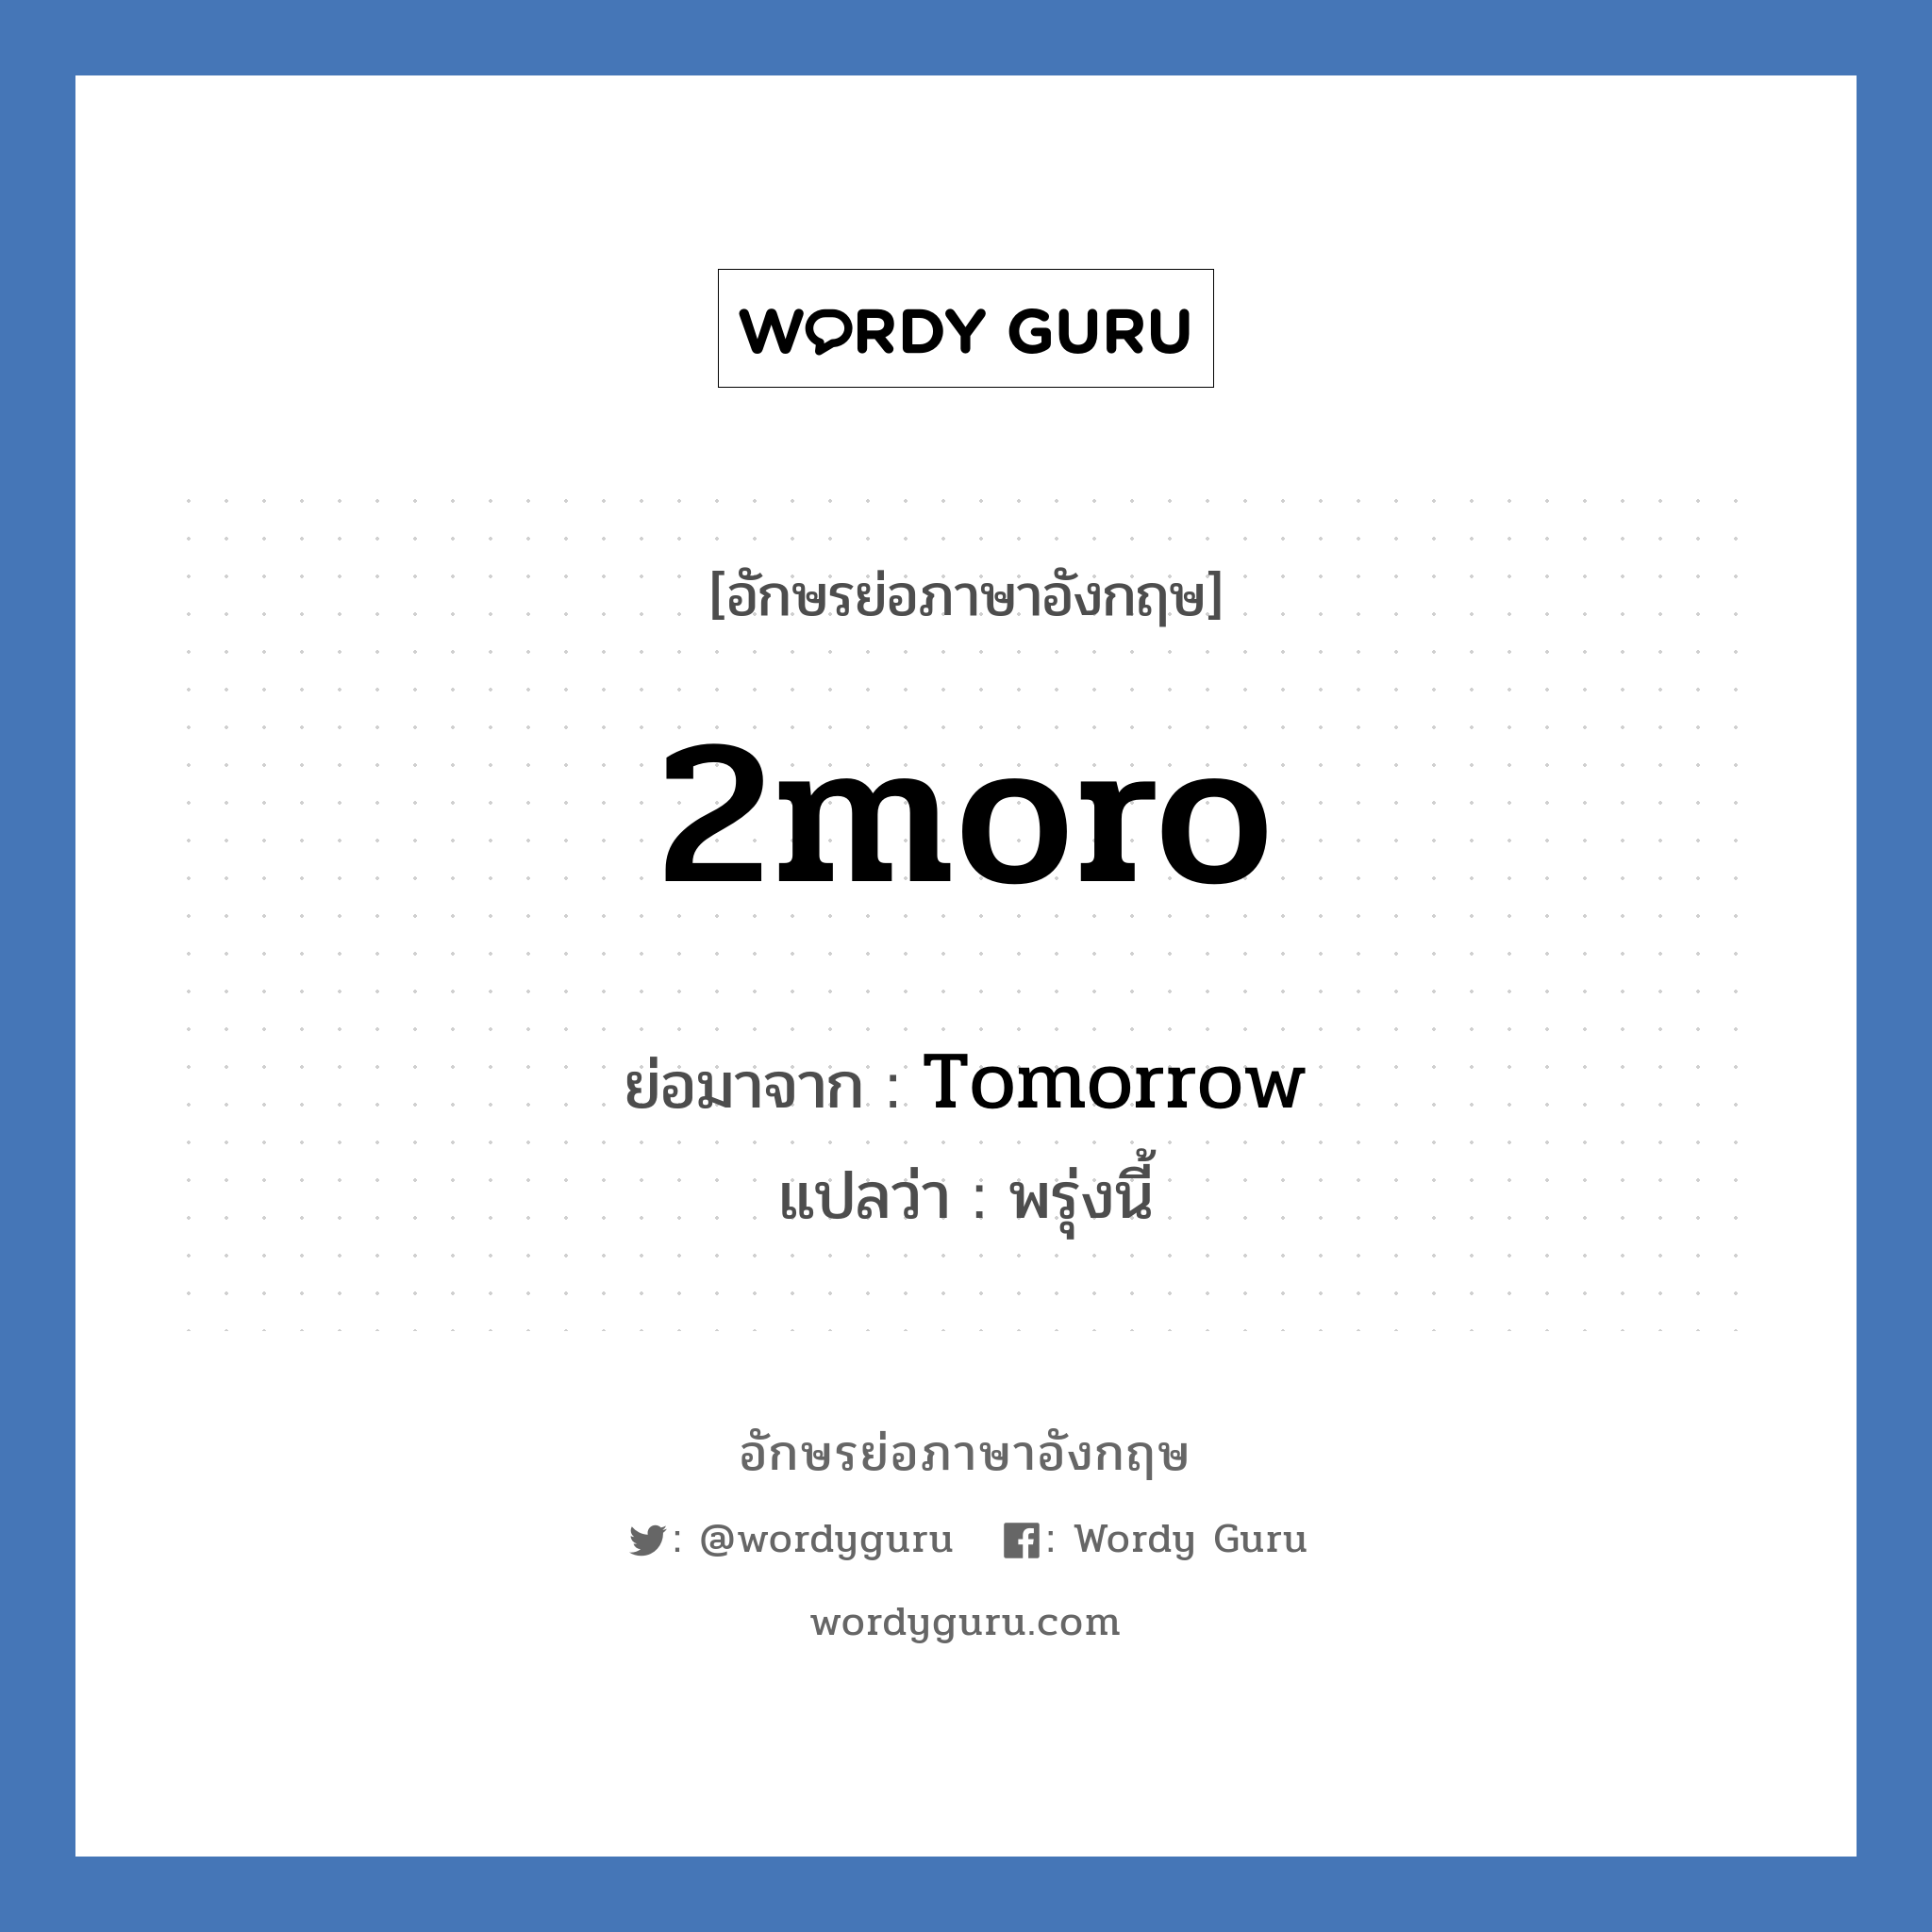 2moro ย่อมาจาก? แปลว่า?, อักษรย่อภาษาอังกฤษ 2moro ย่อมาจาก Tomorrow แปลว่า พรุ่งนี้